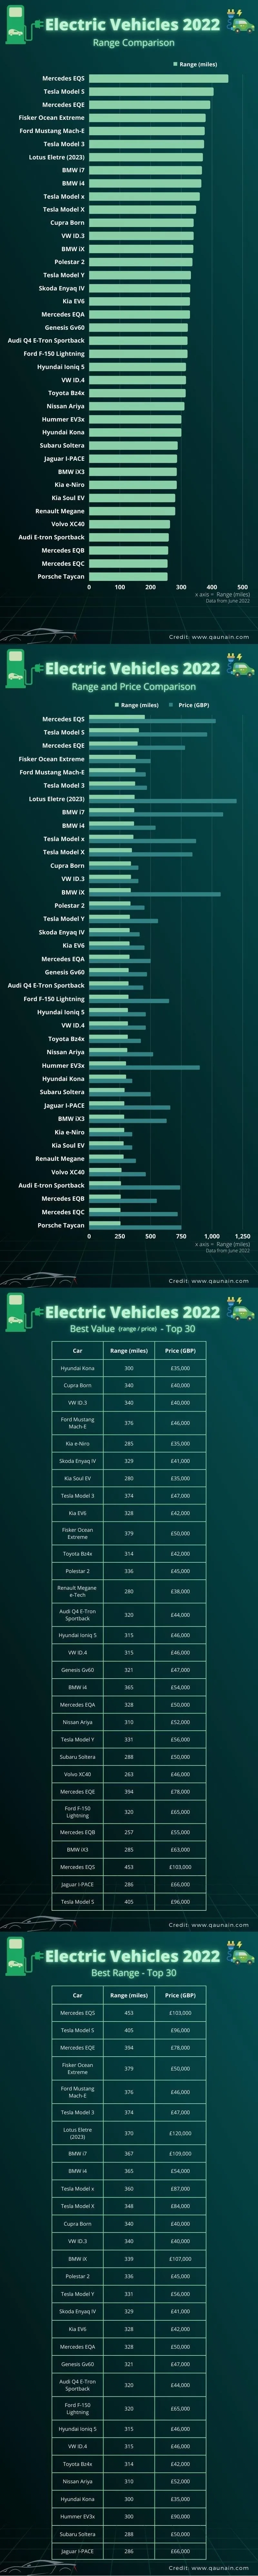 EV Car Stats - 2022 - Range and Price Comparisons